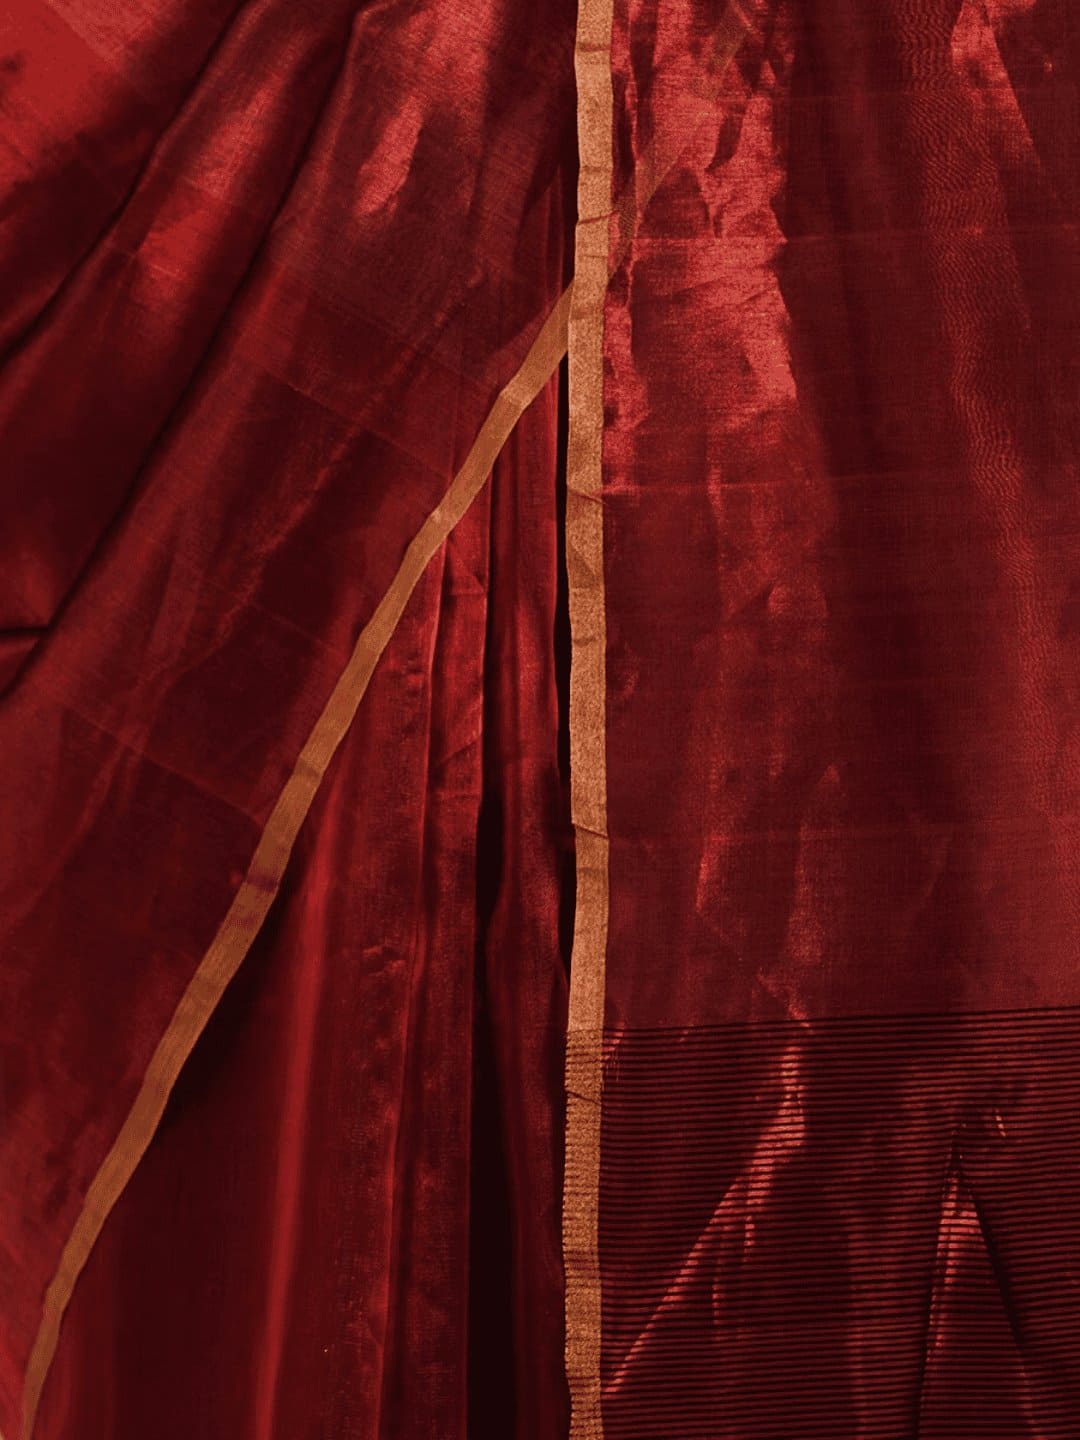 Maroon Red Silk Chanderi Saree - Charkha TalesMaroon Red Silk Chanderi Saree